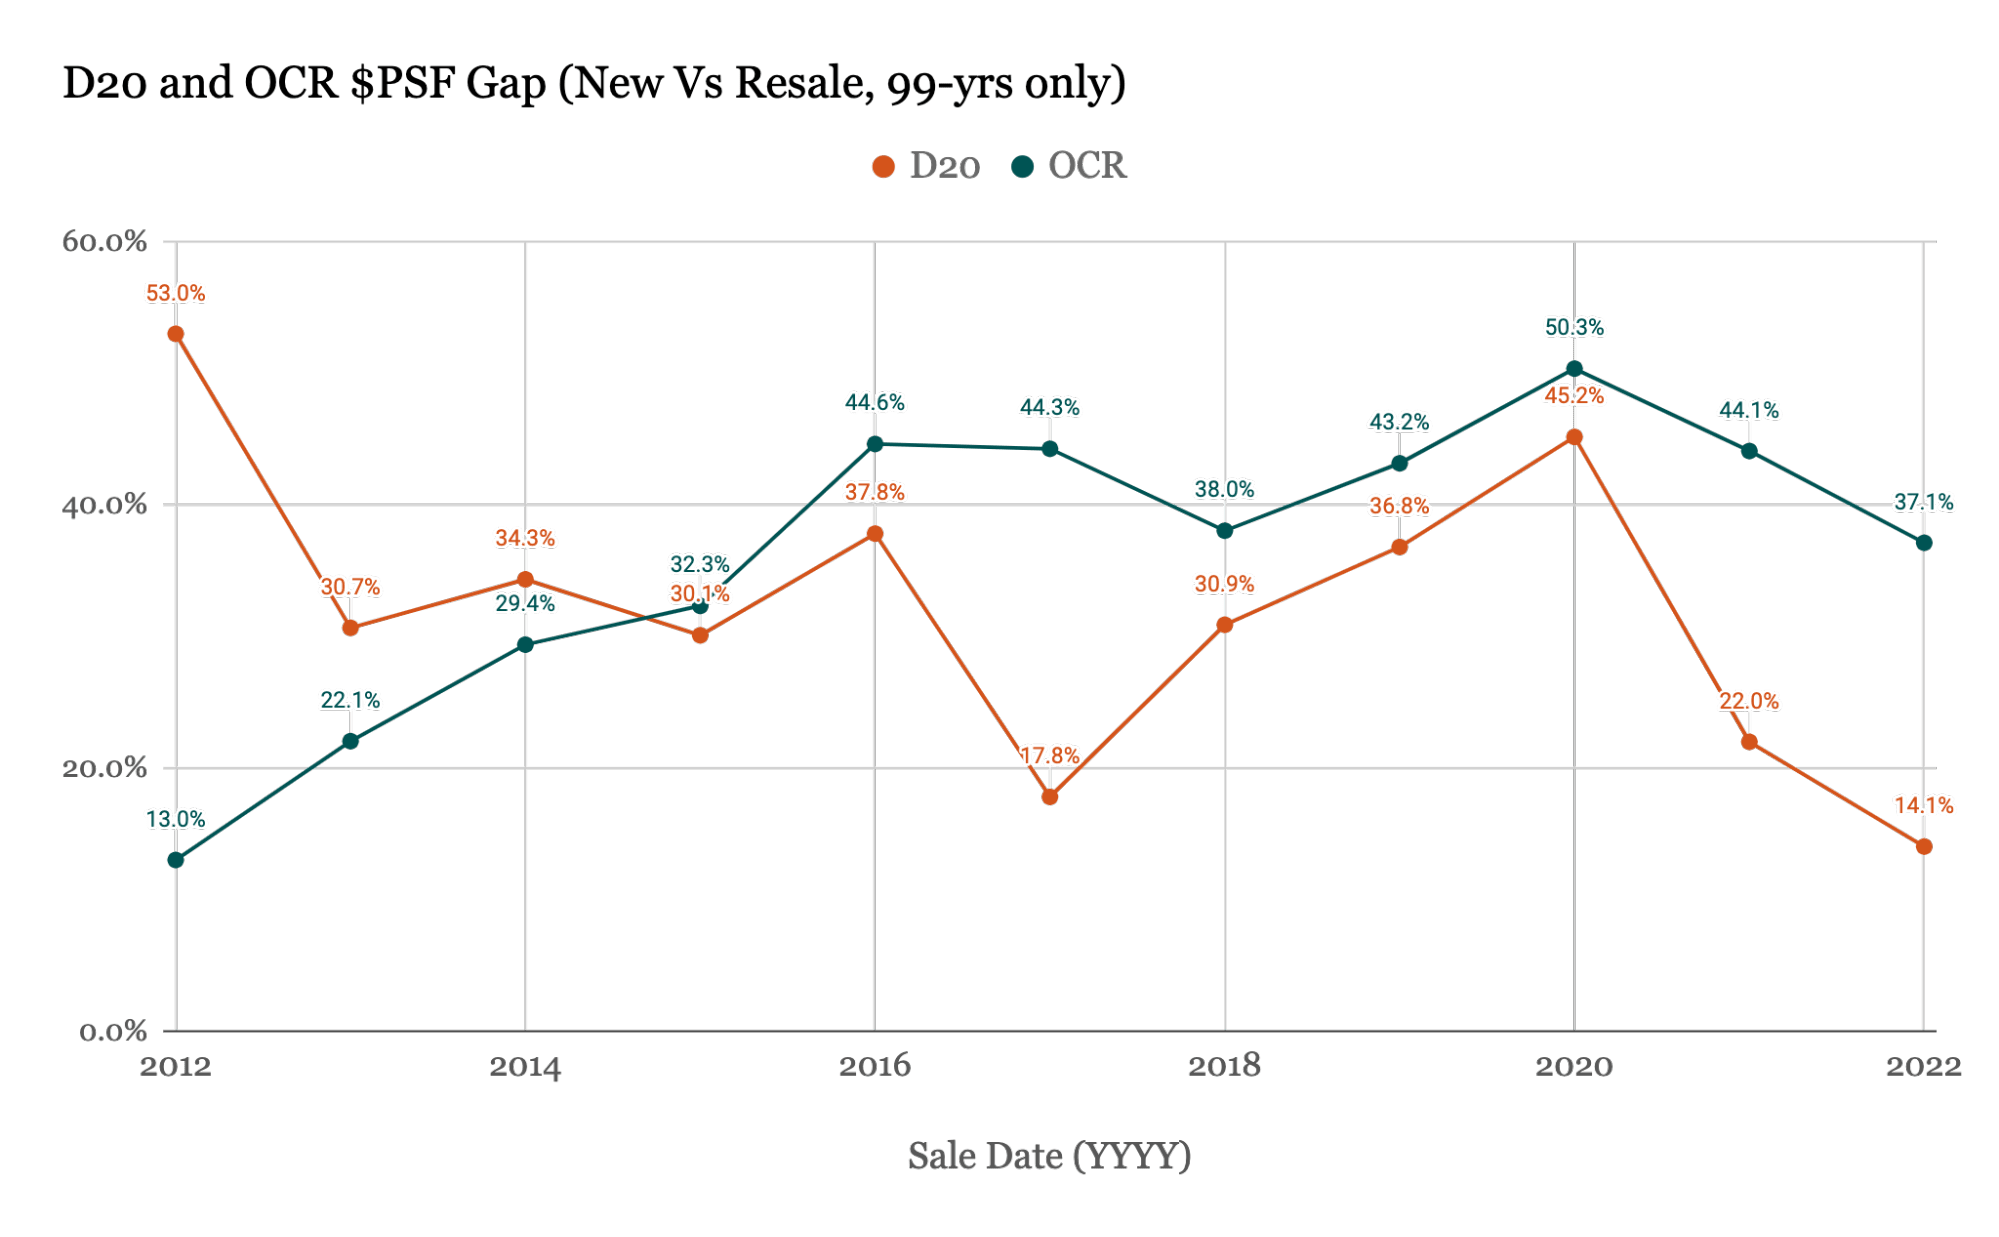 d20 vs ocr psf gap new vs resale